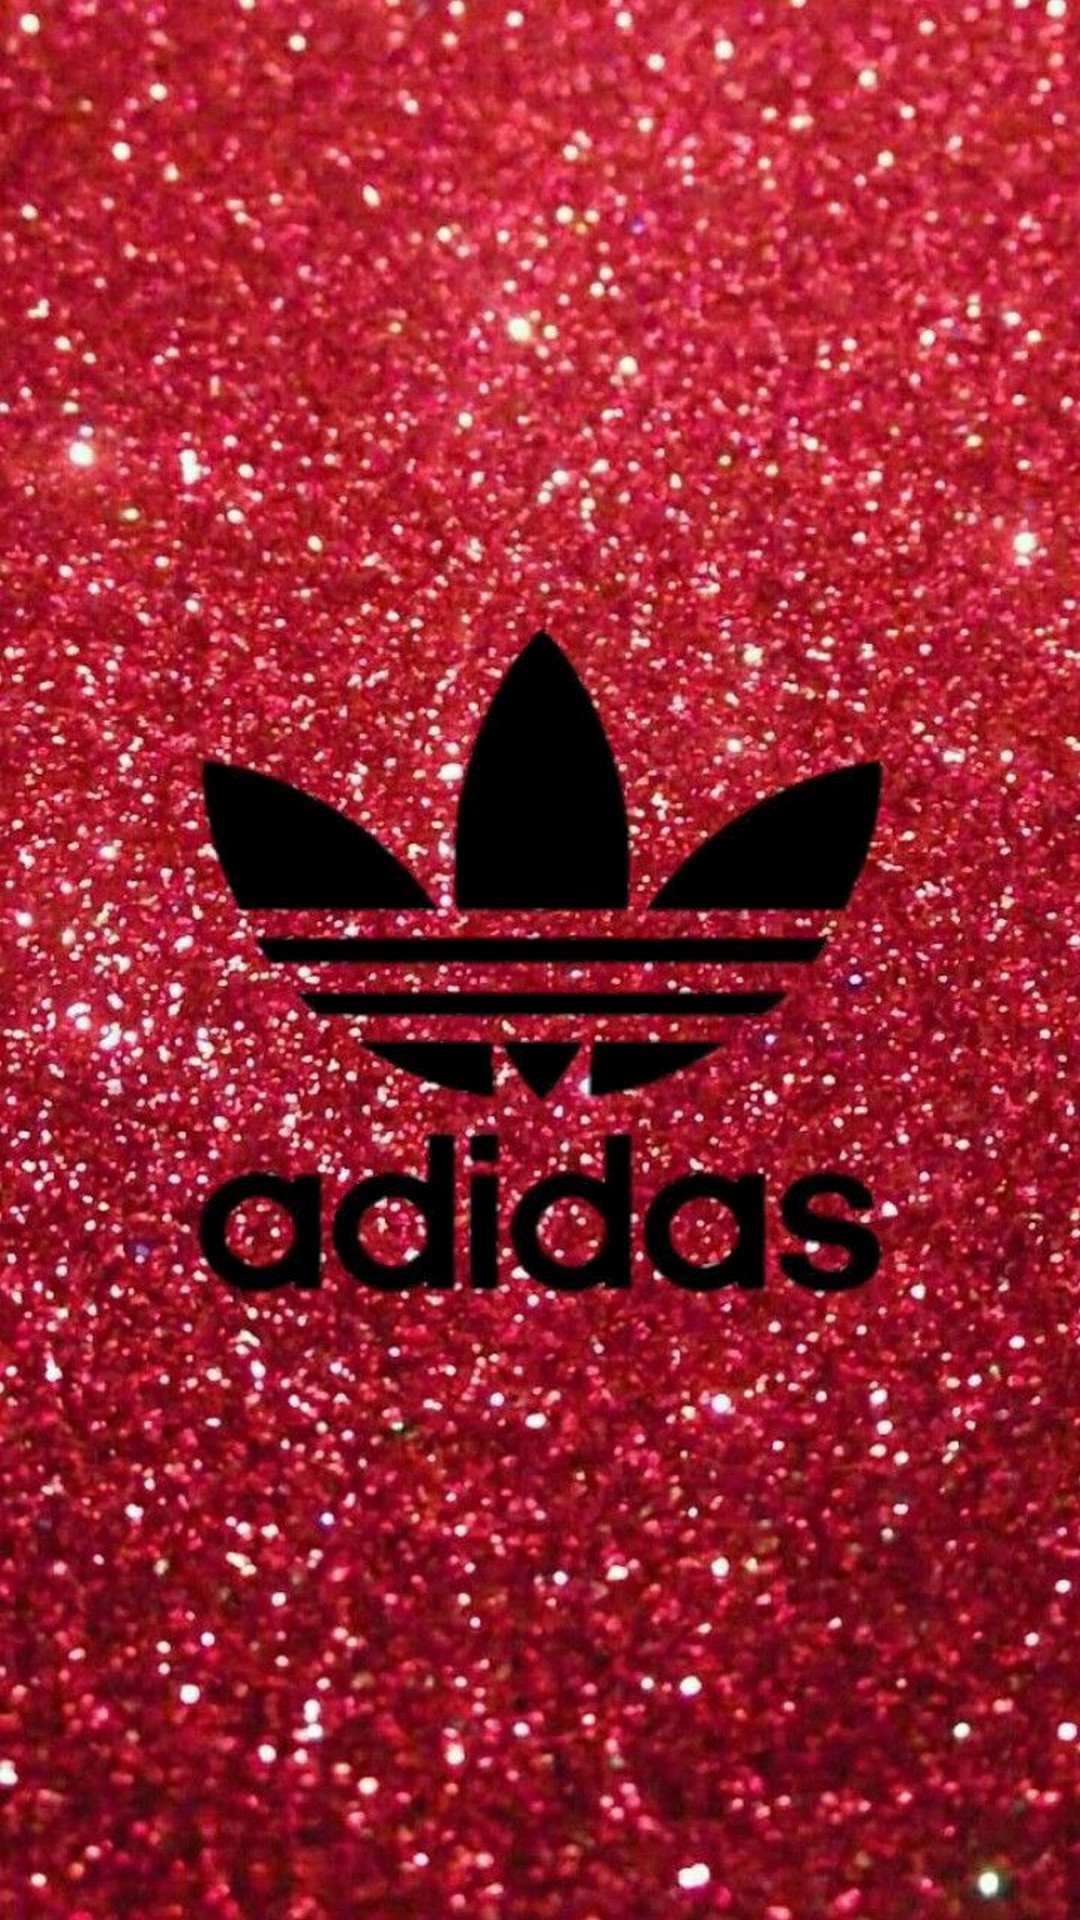 adidas wallpaper,pink,red,text,glitter,maroon